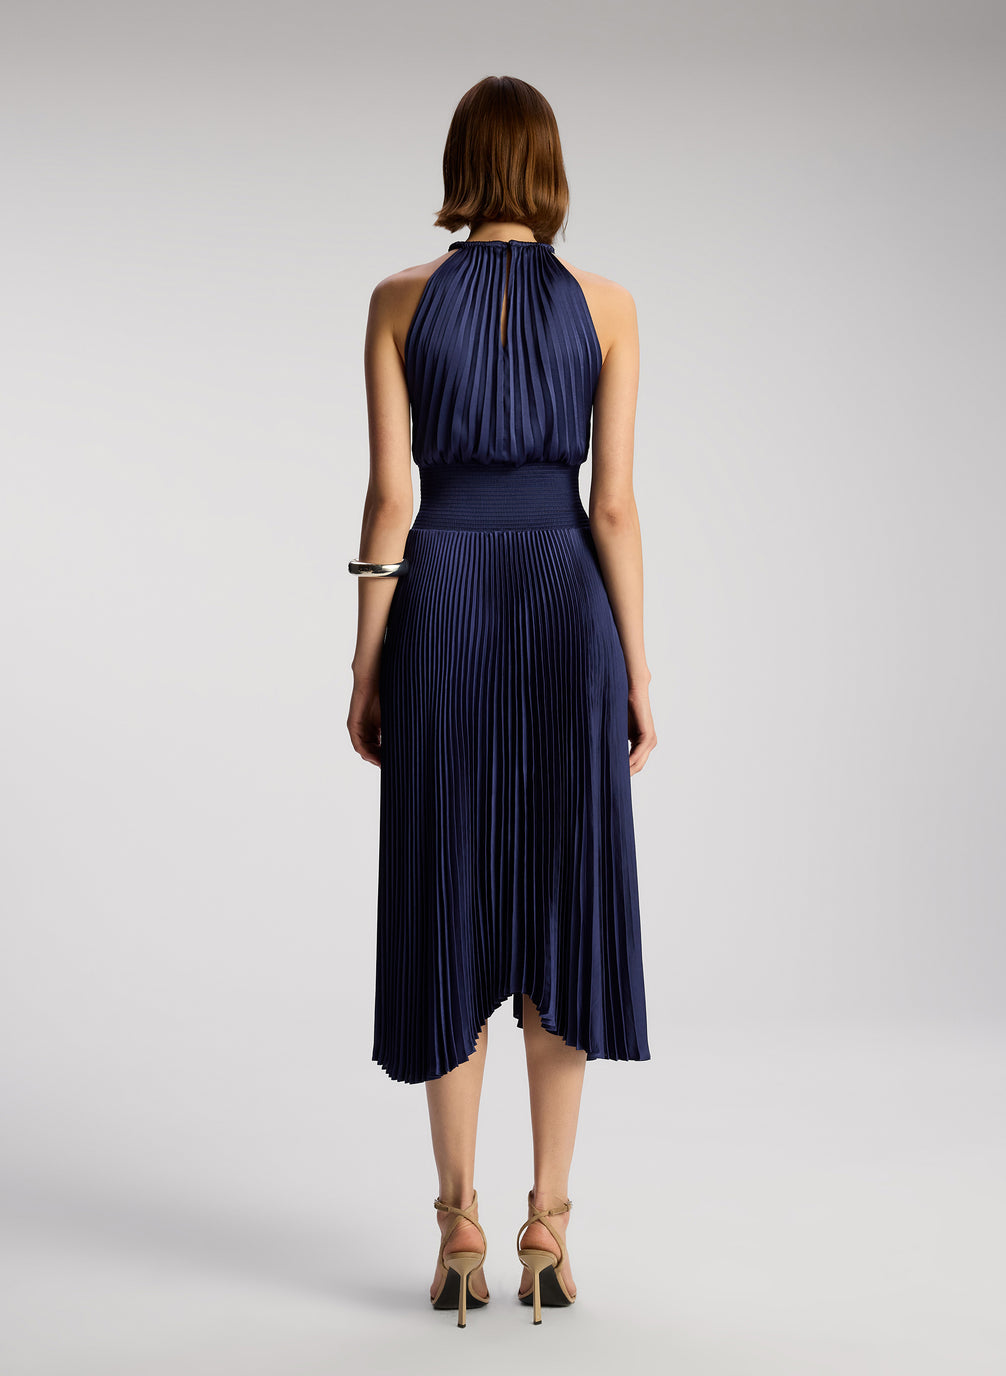 back view of woman wearing navy blue sleeveless pleated midi dress